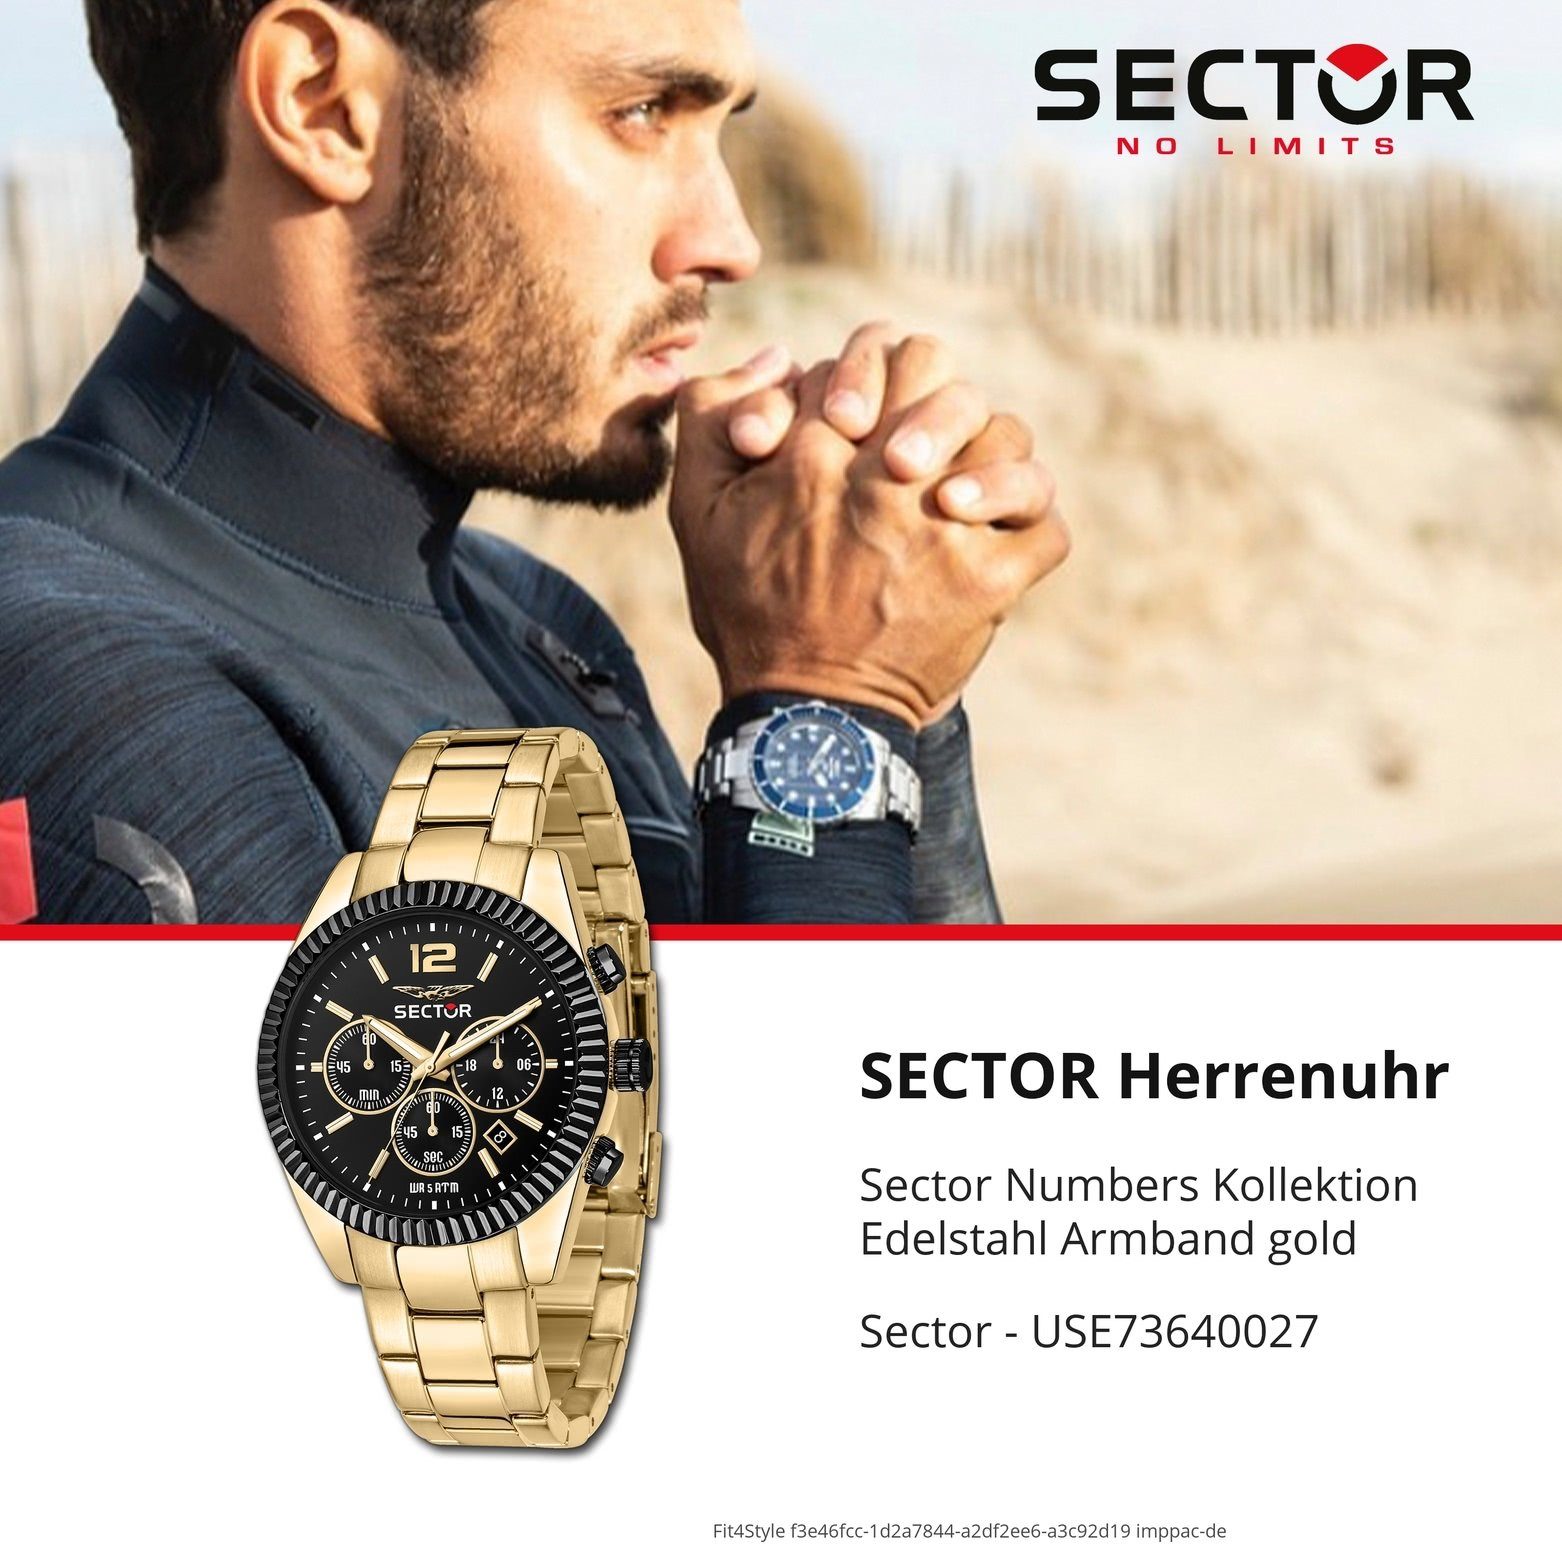 gold, Armbanduhr Limits No Chronograph Sector Sector Fashion Edelstahlarmband Chrono, Herren (45mm), Sector Herren Armbanduhr groß rund,